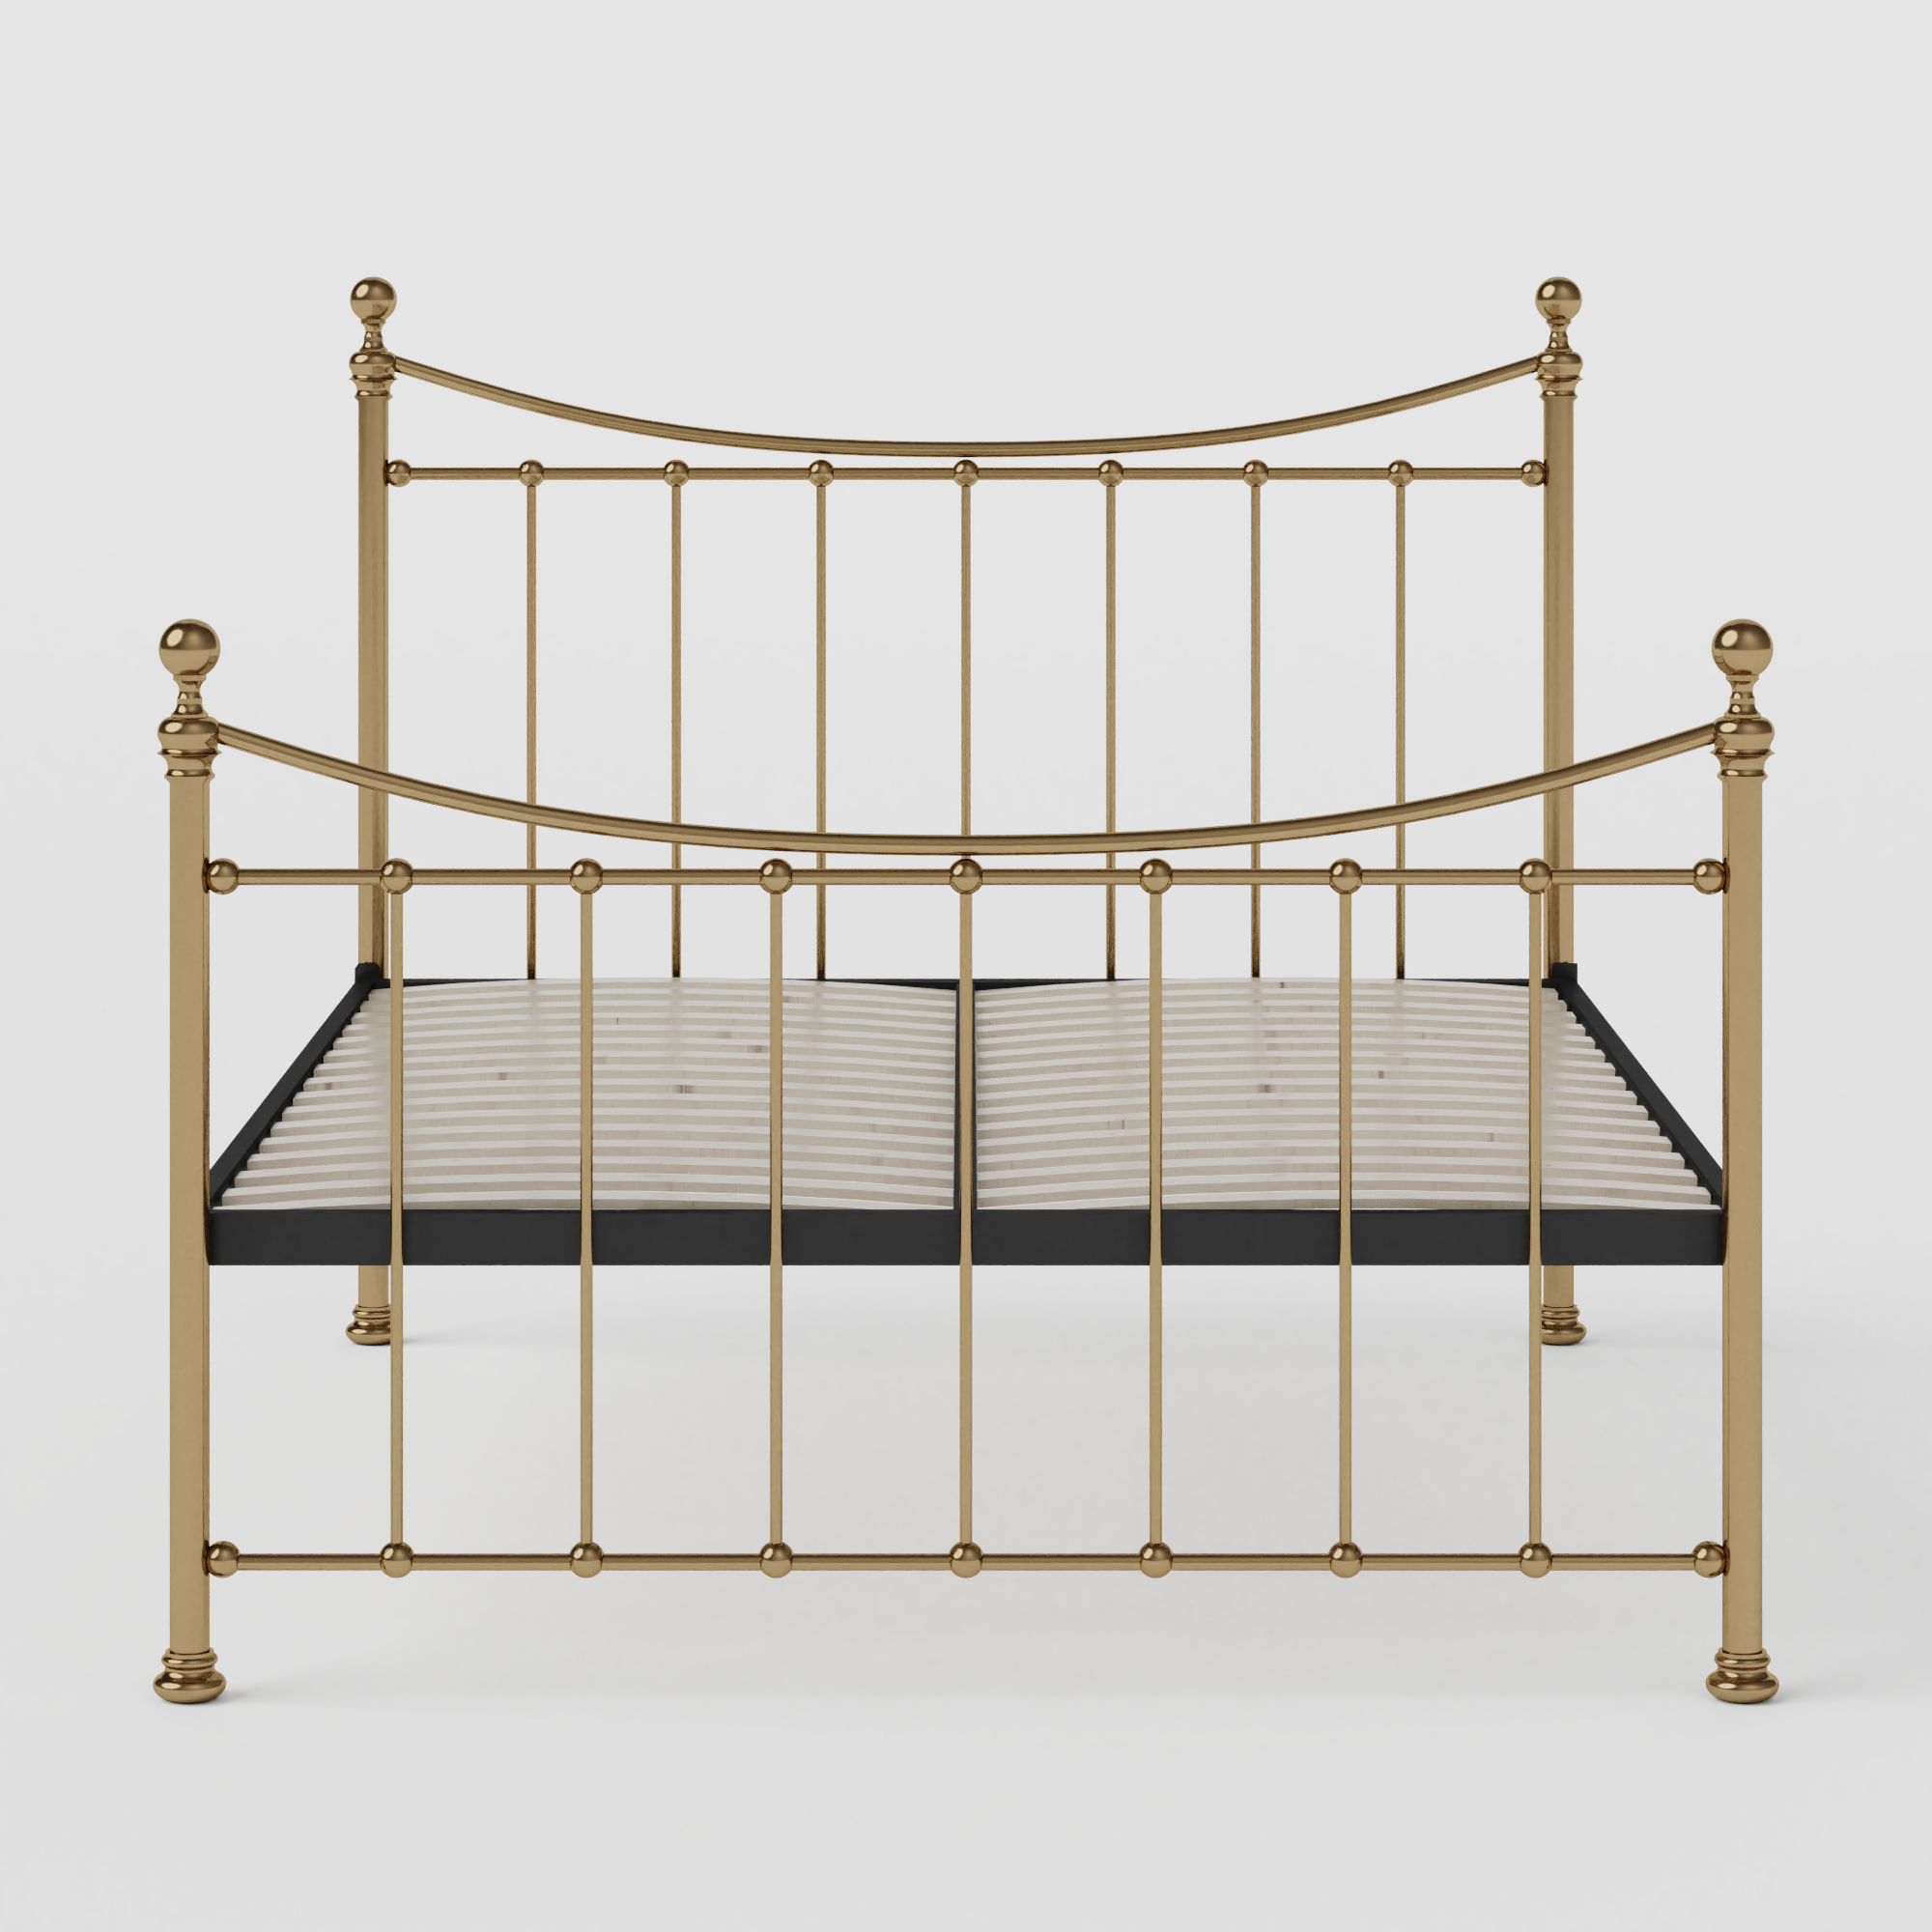 Kendal brass bed